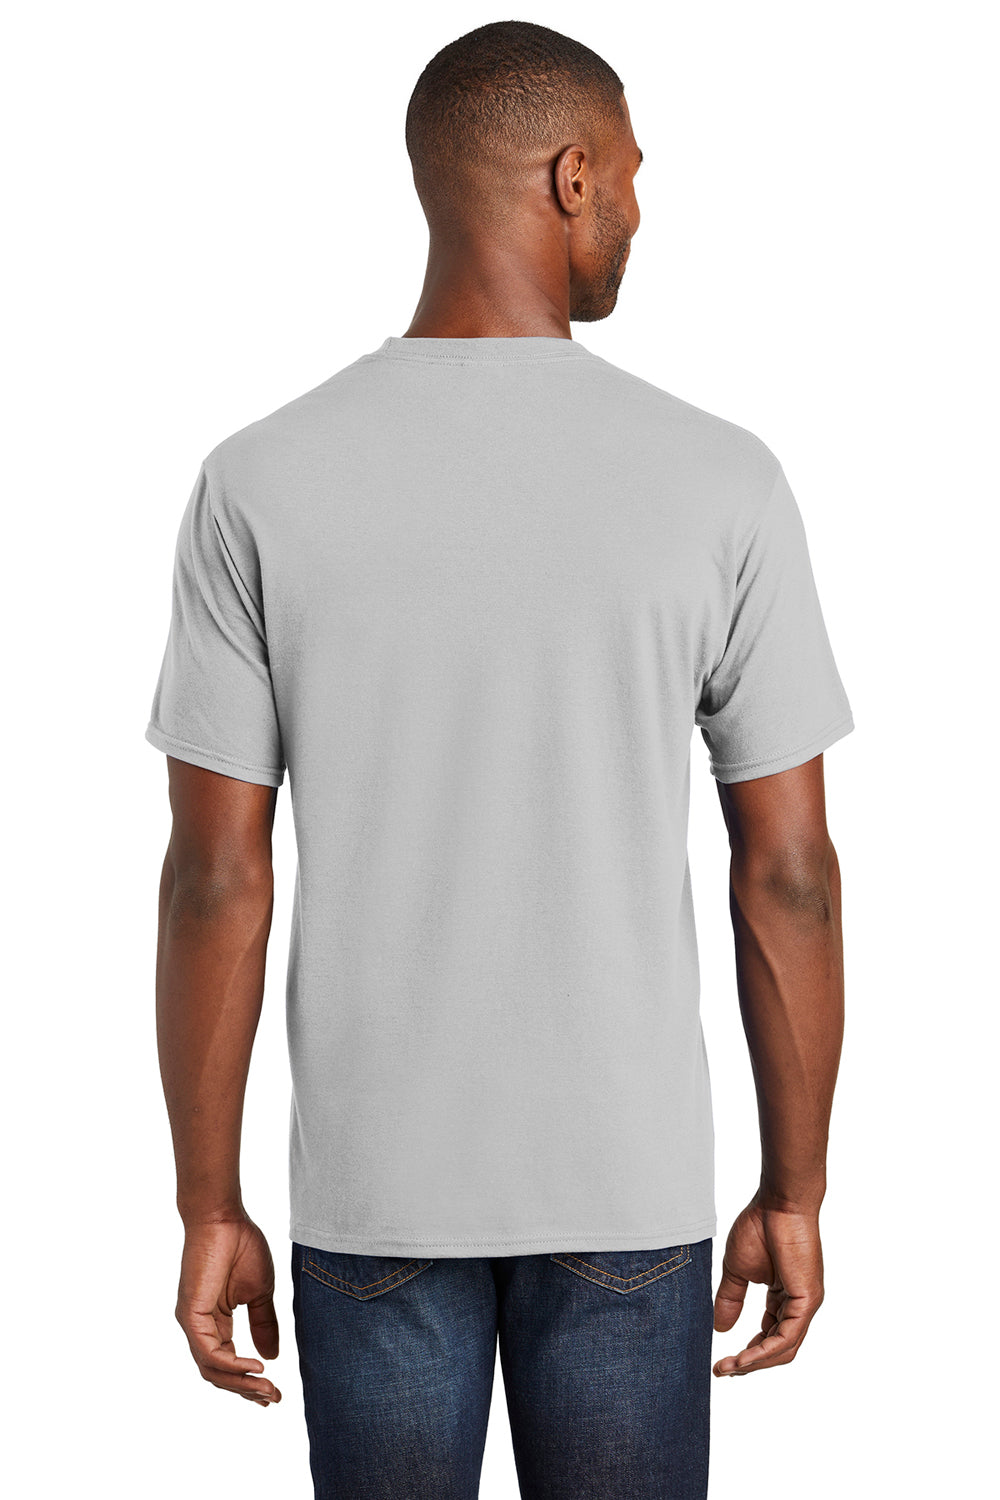 Port & Company PC450 Mens Fan Favorite Short Sleeve Crewneck T-Shirt Silver Grey Back